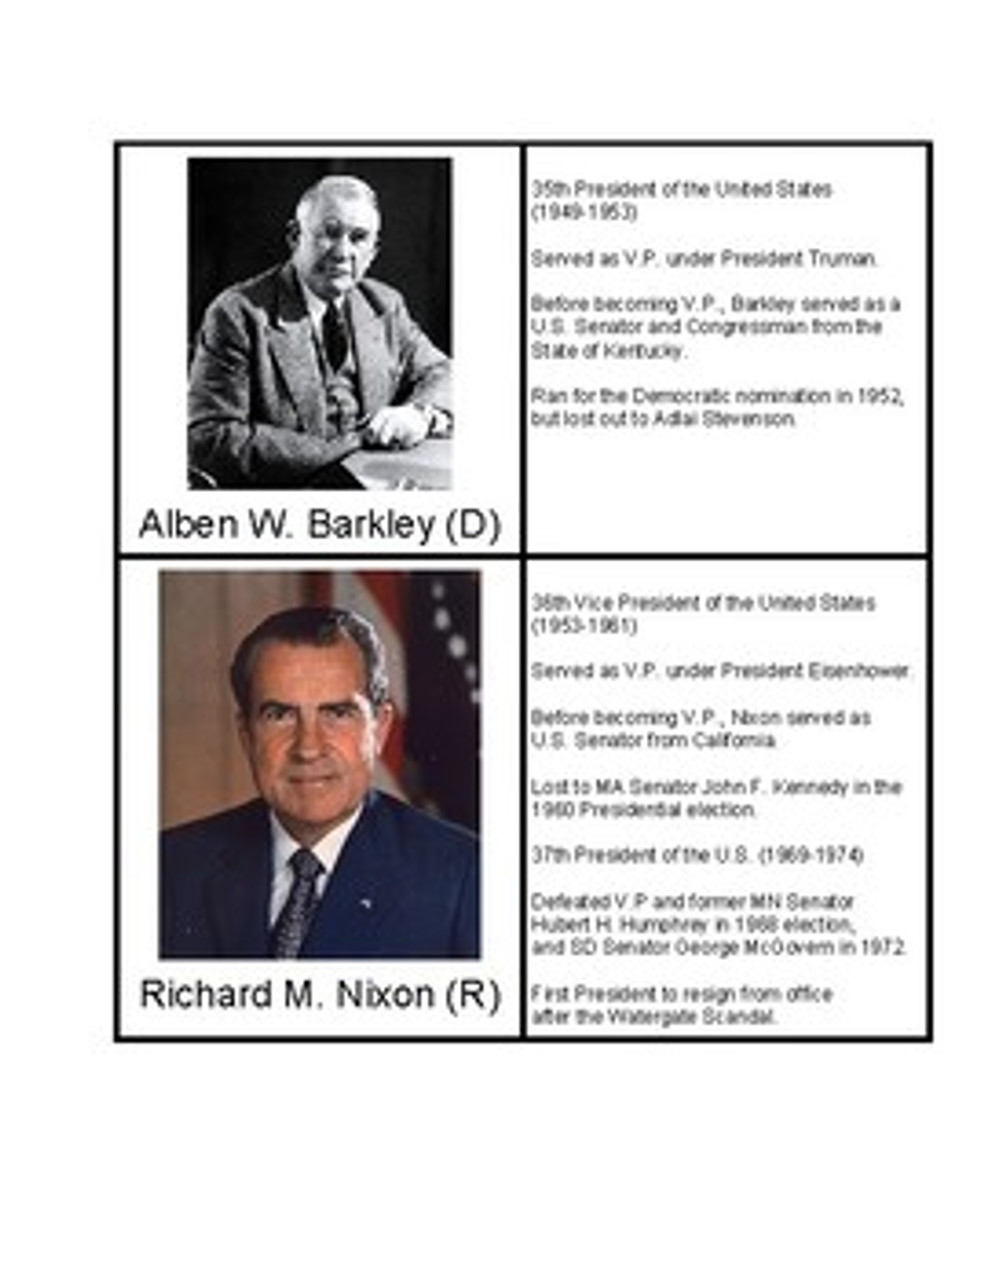 Vice Presidents (1950-Present)